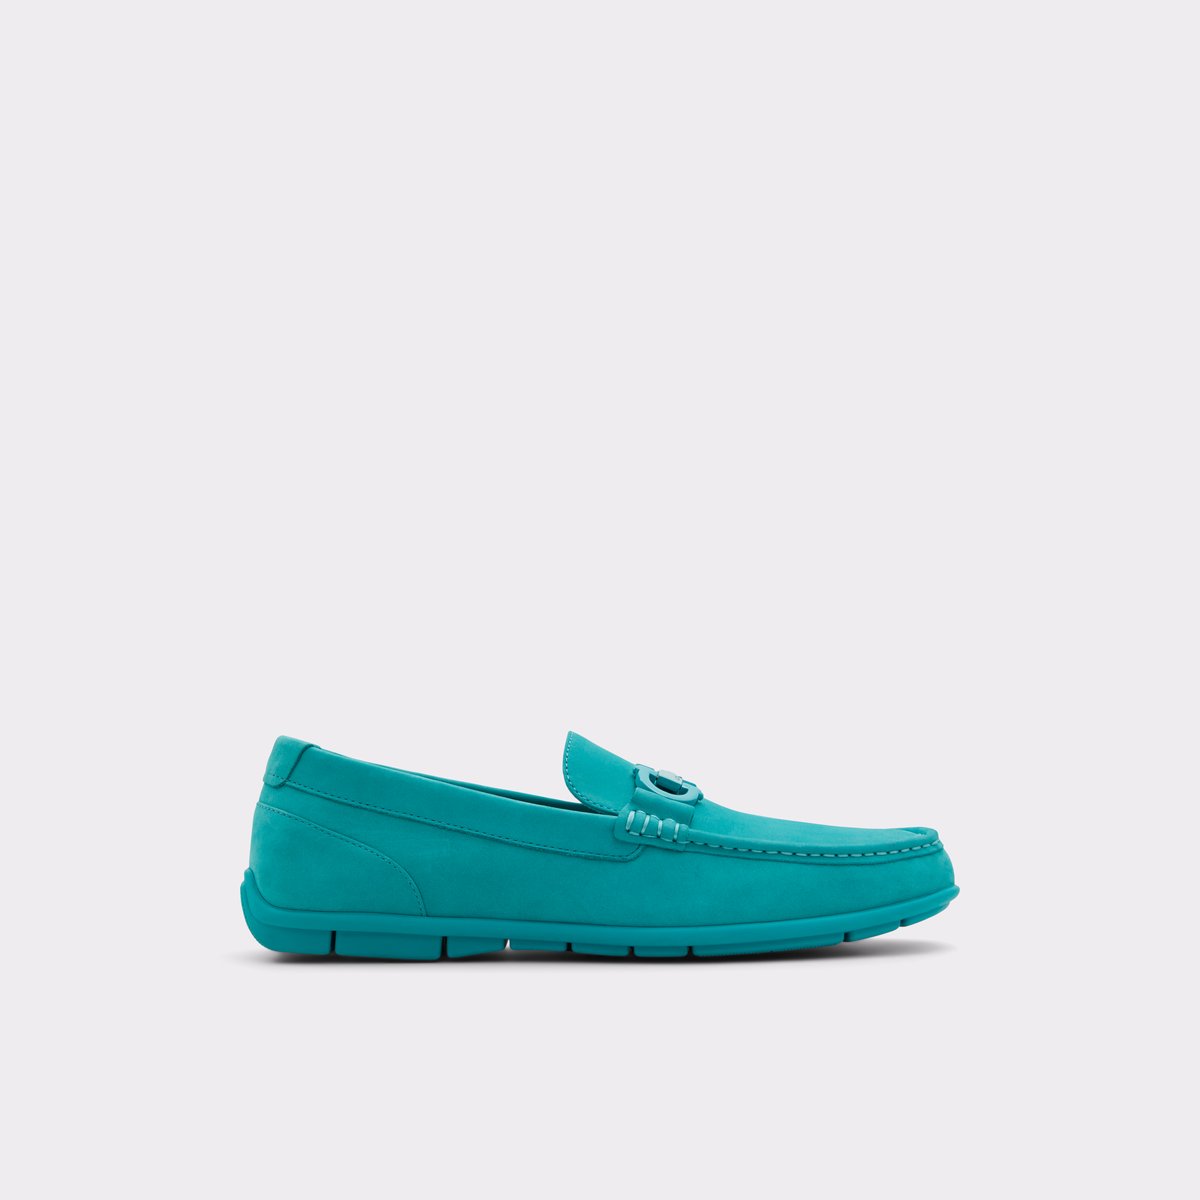 Orlovoflex Turquoise Men's Casual Shoes | ALDO Canada